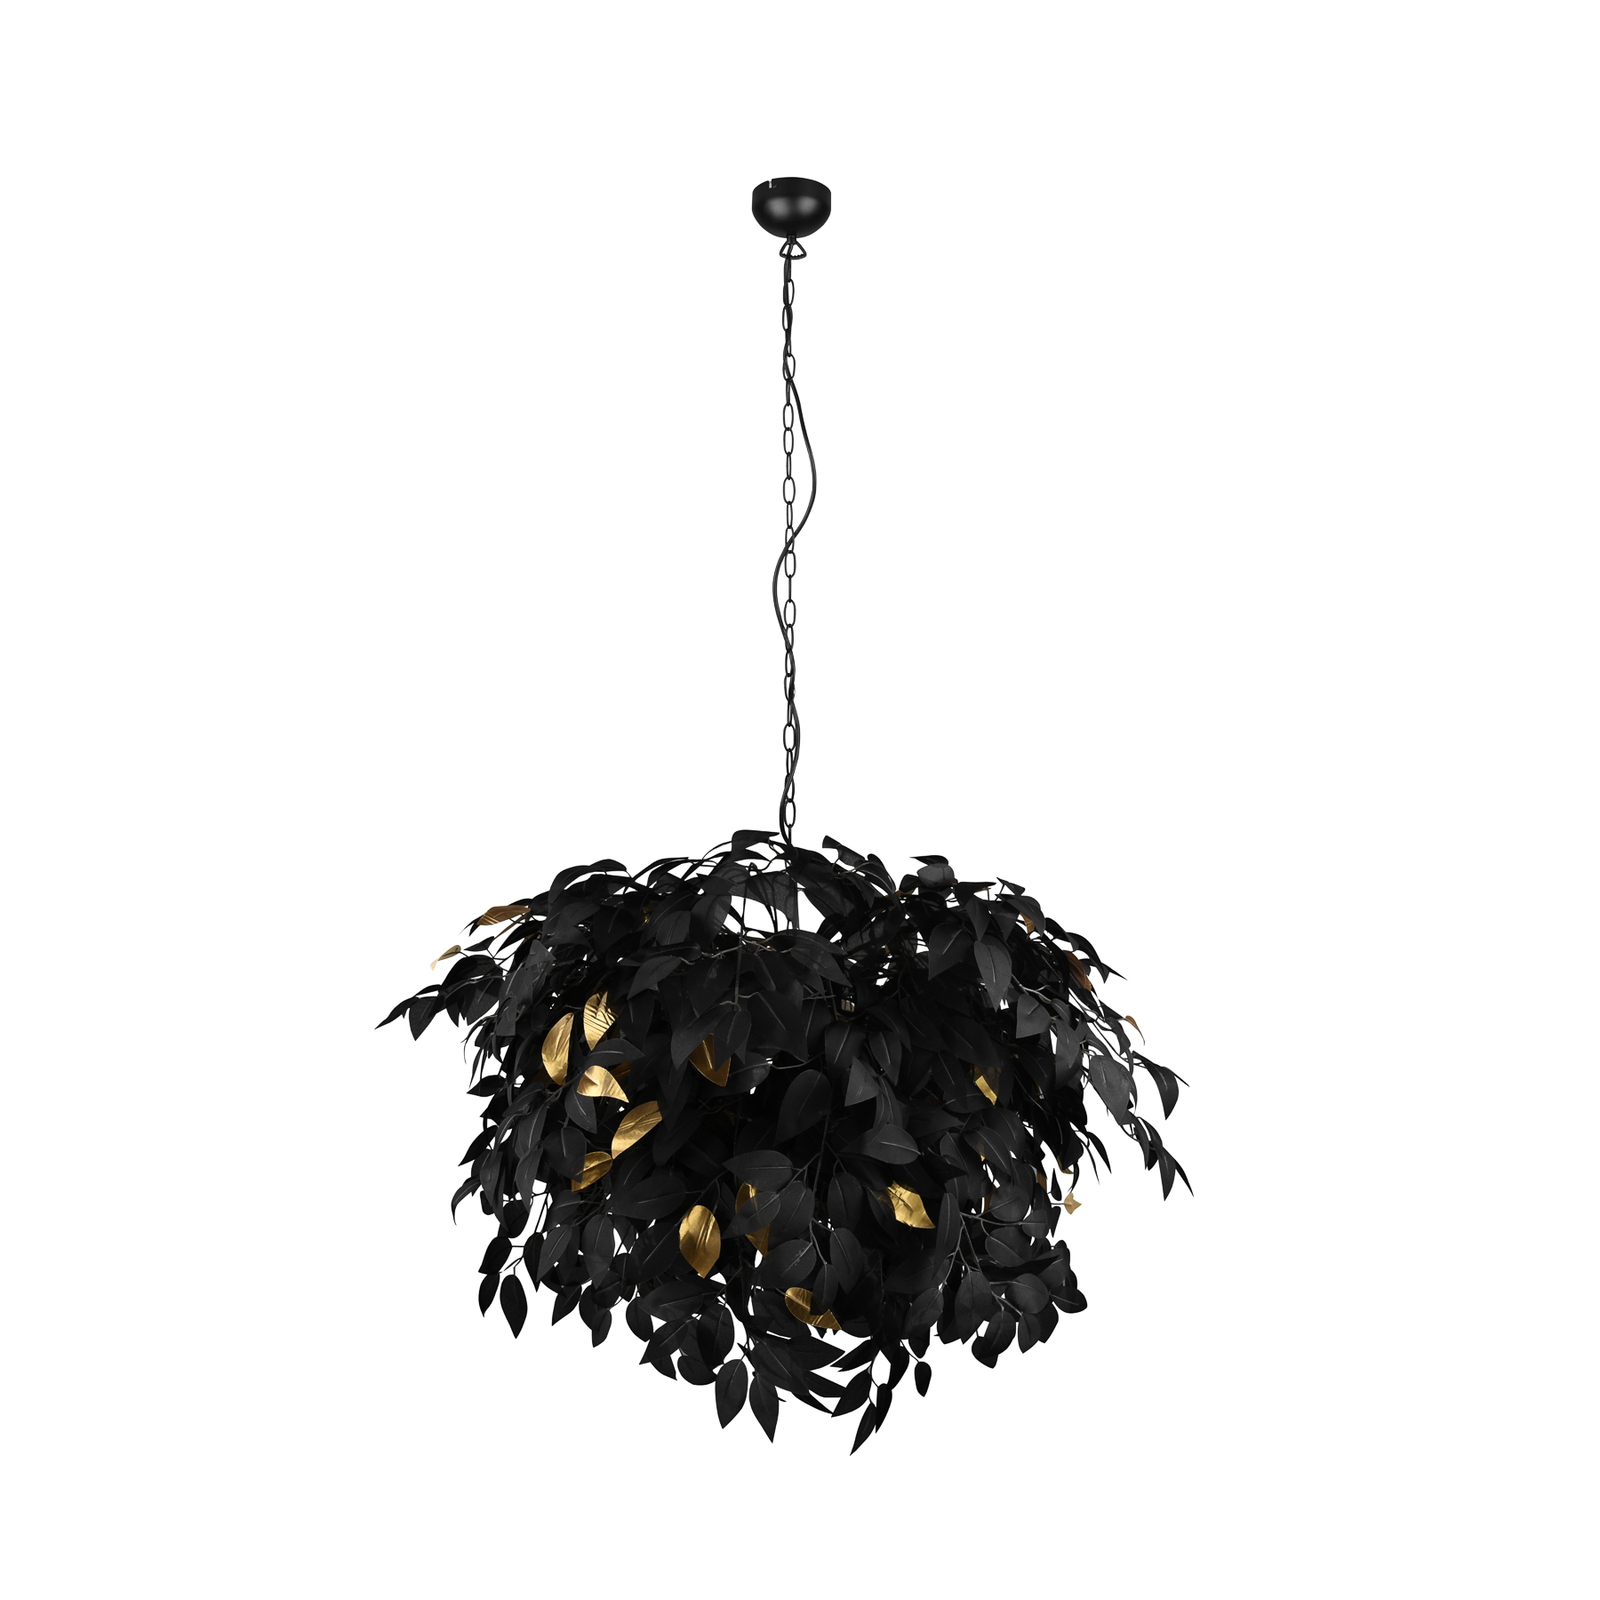 Hanglamp Leavy, zwart/goud, Ø 70 cm, kunststof